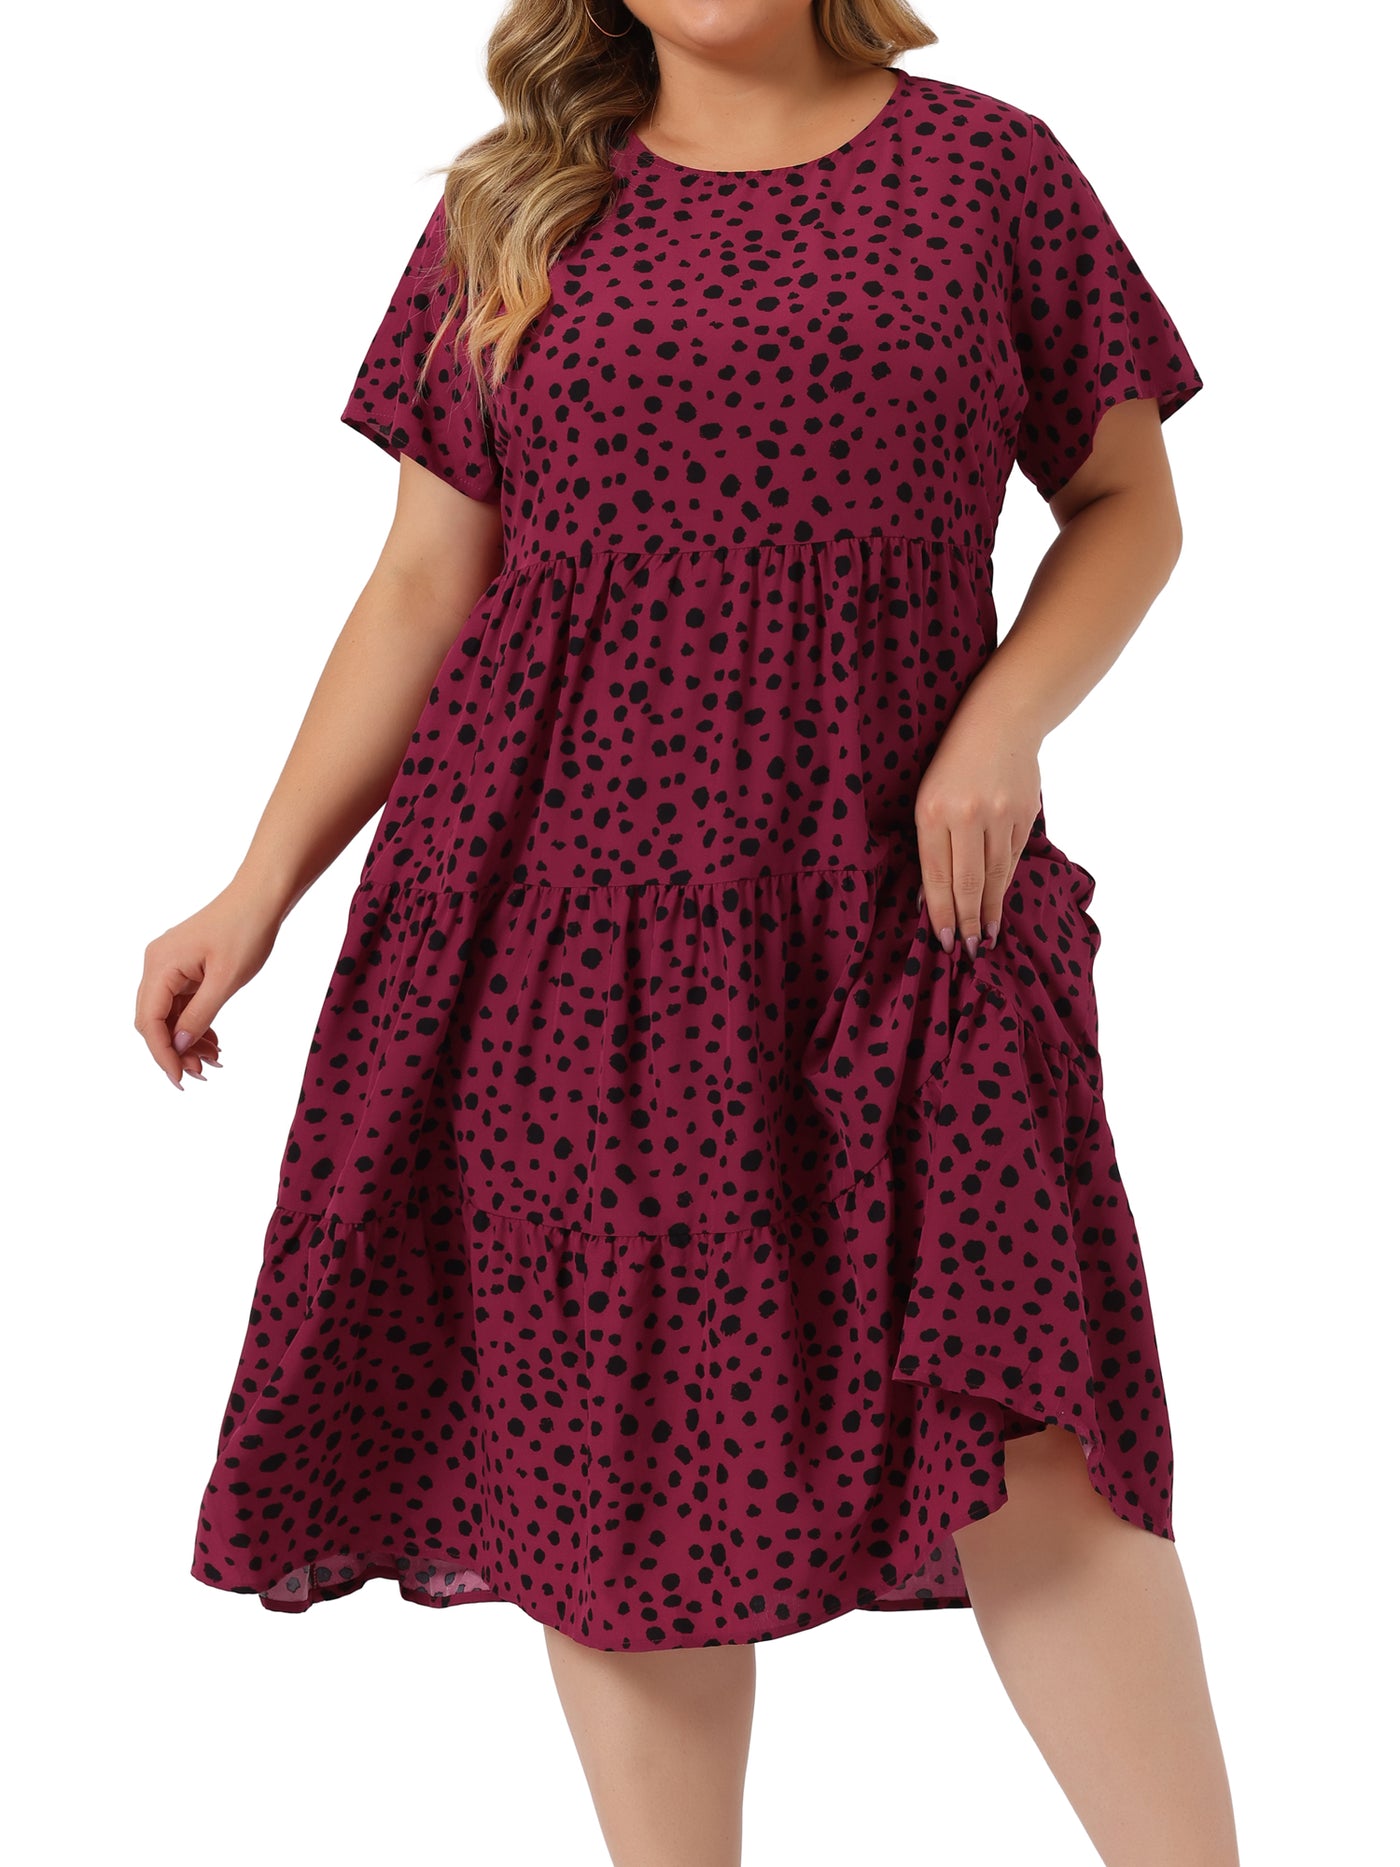 Bublédon Plus Size Polka Dots Dress for Women Short Sleeve Midi Layered Dresses